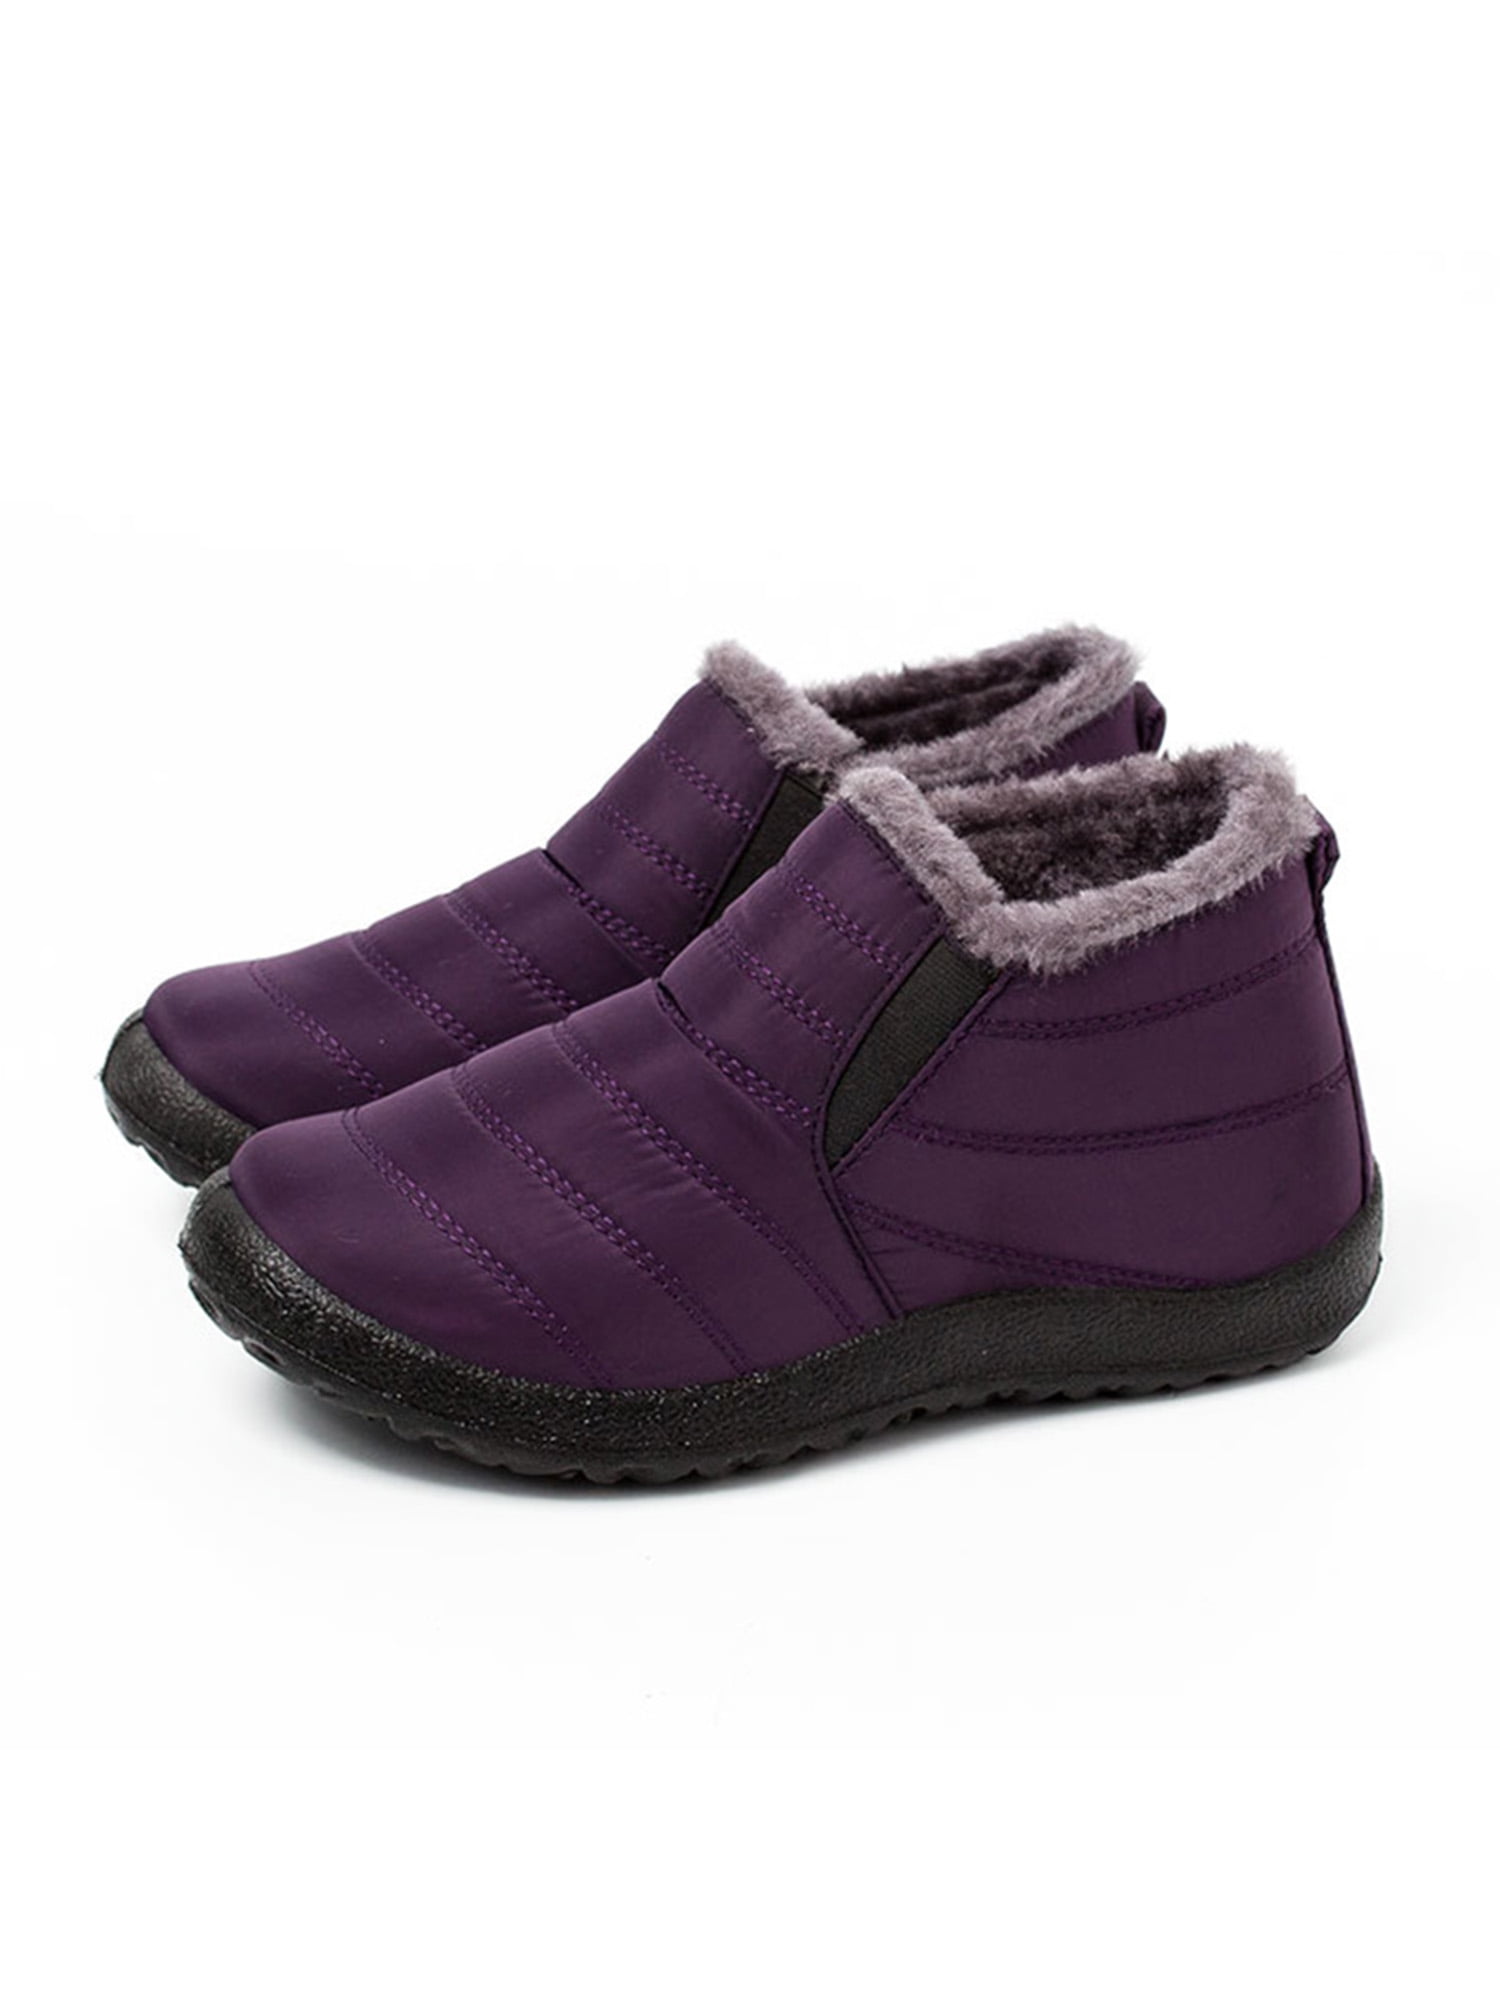 Women Ladies Snow Ankle Boots Winter Warm Fur Lined Waterproof Sneakers Shoes UK 